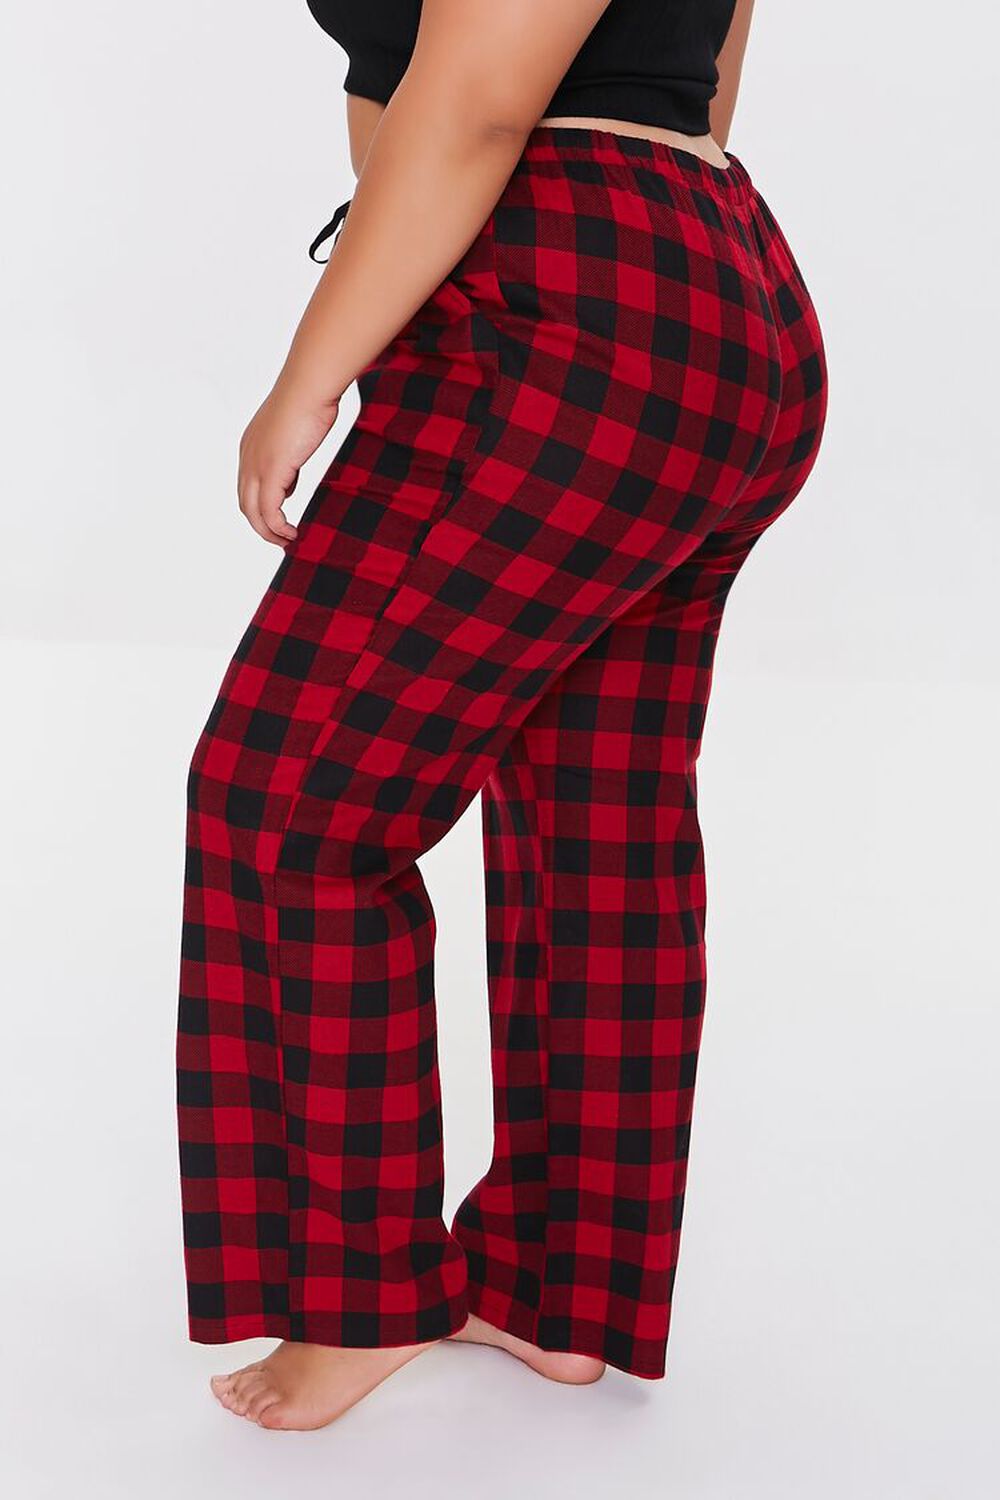 Ralph Lauren Red Black Plaid Pajamas PJ's Sleep Pants NWT